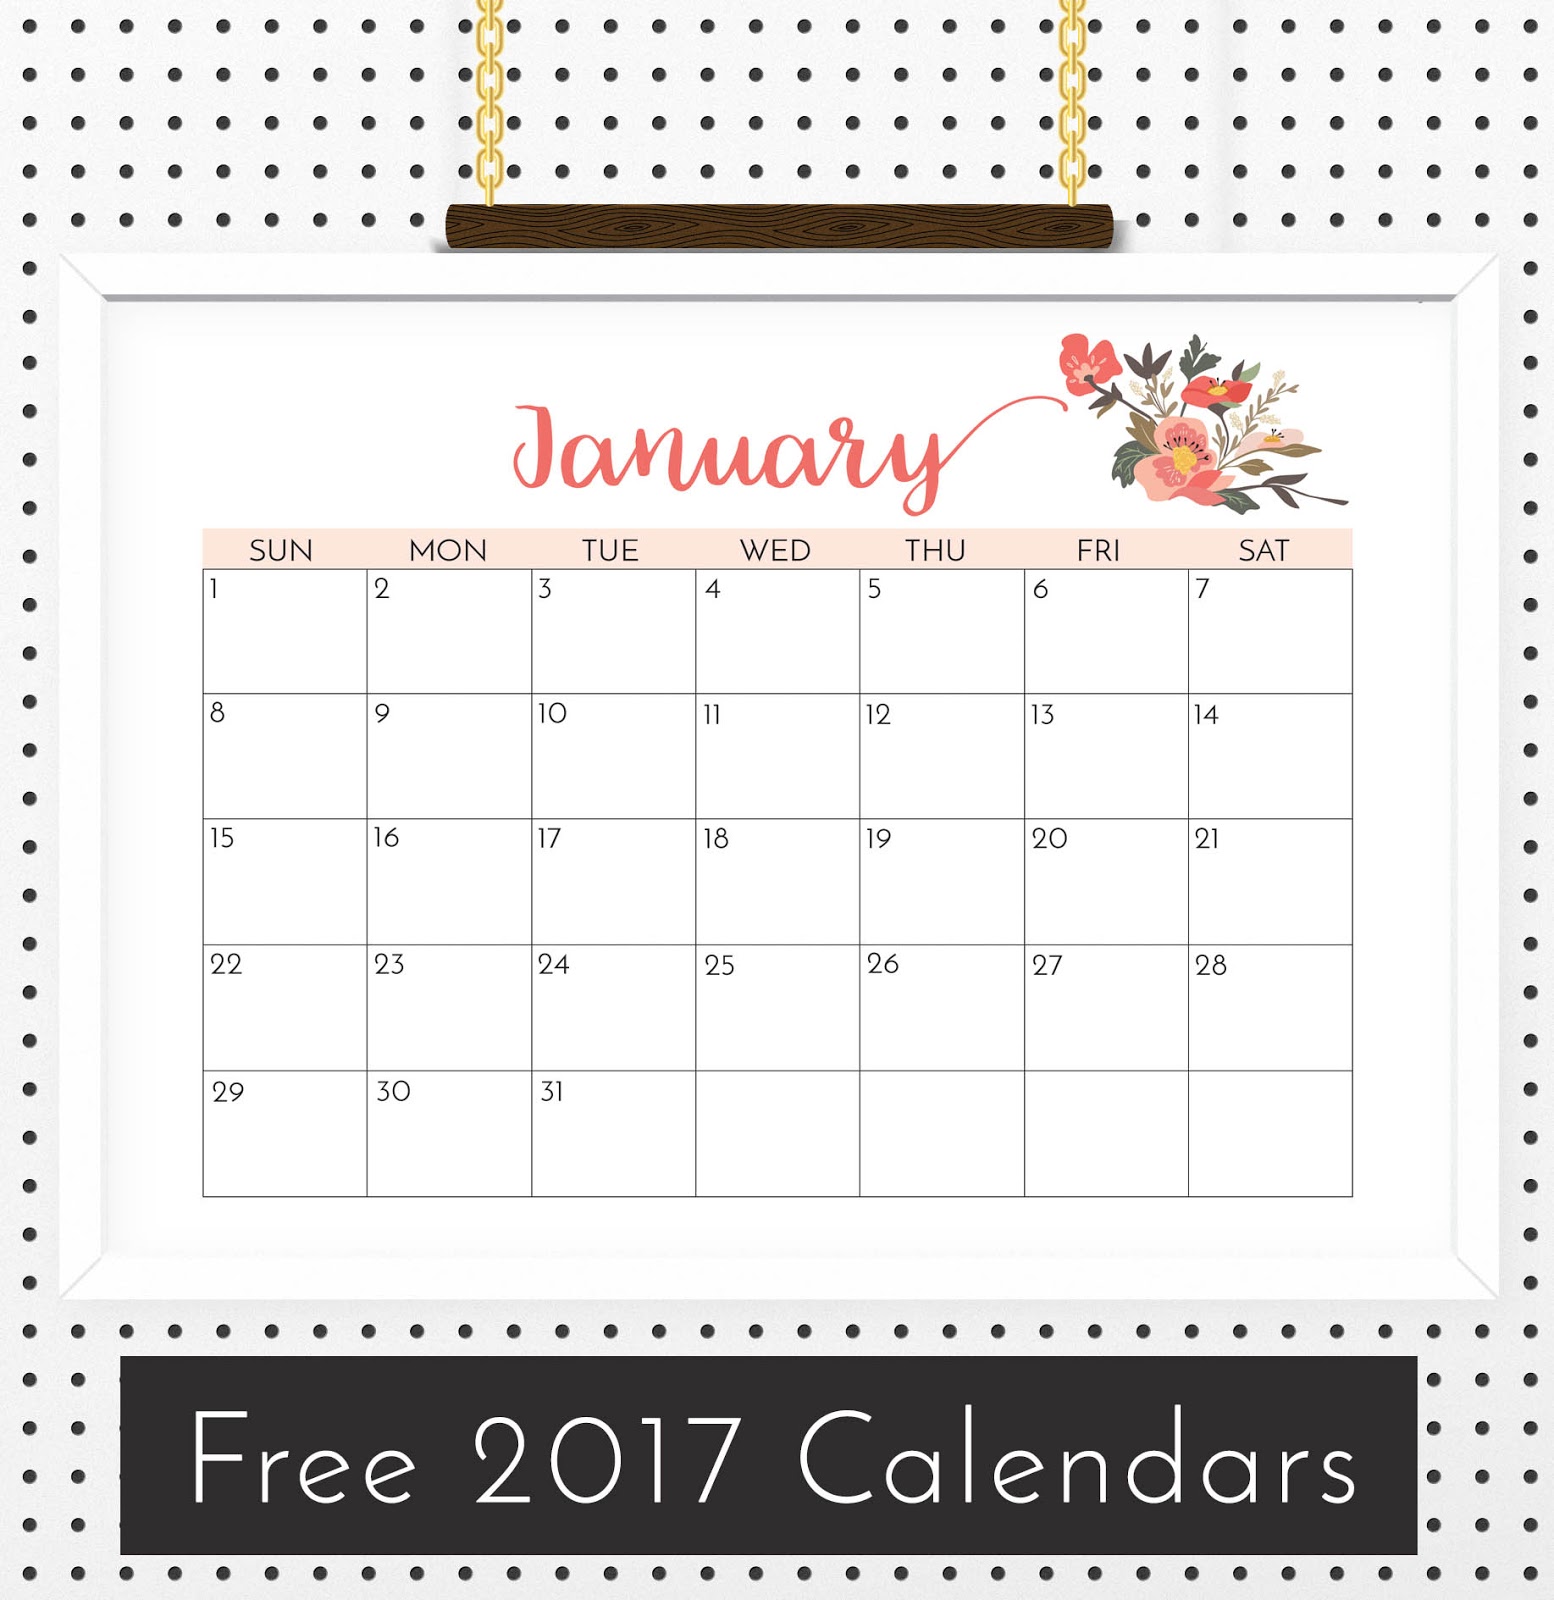 2017 Free Printable Calendars | Crafting in the Rain